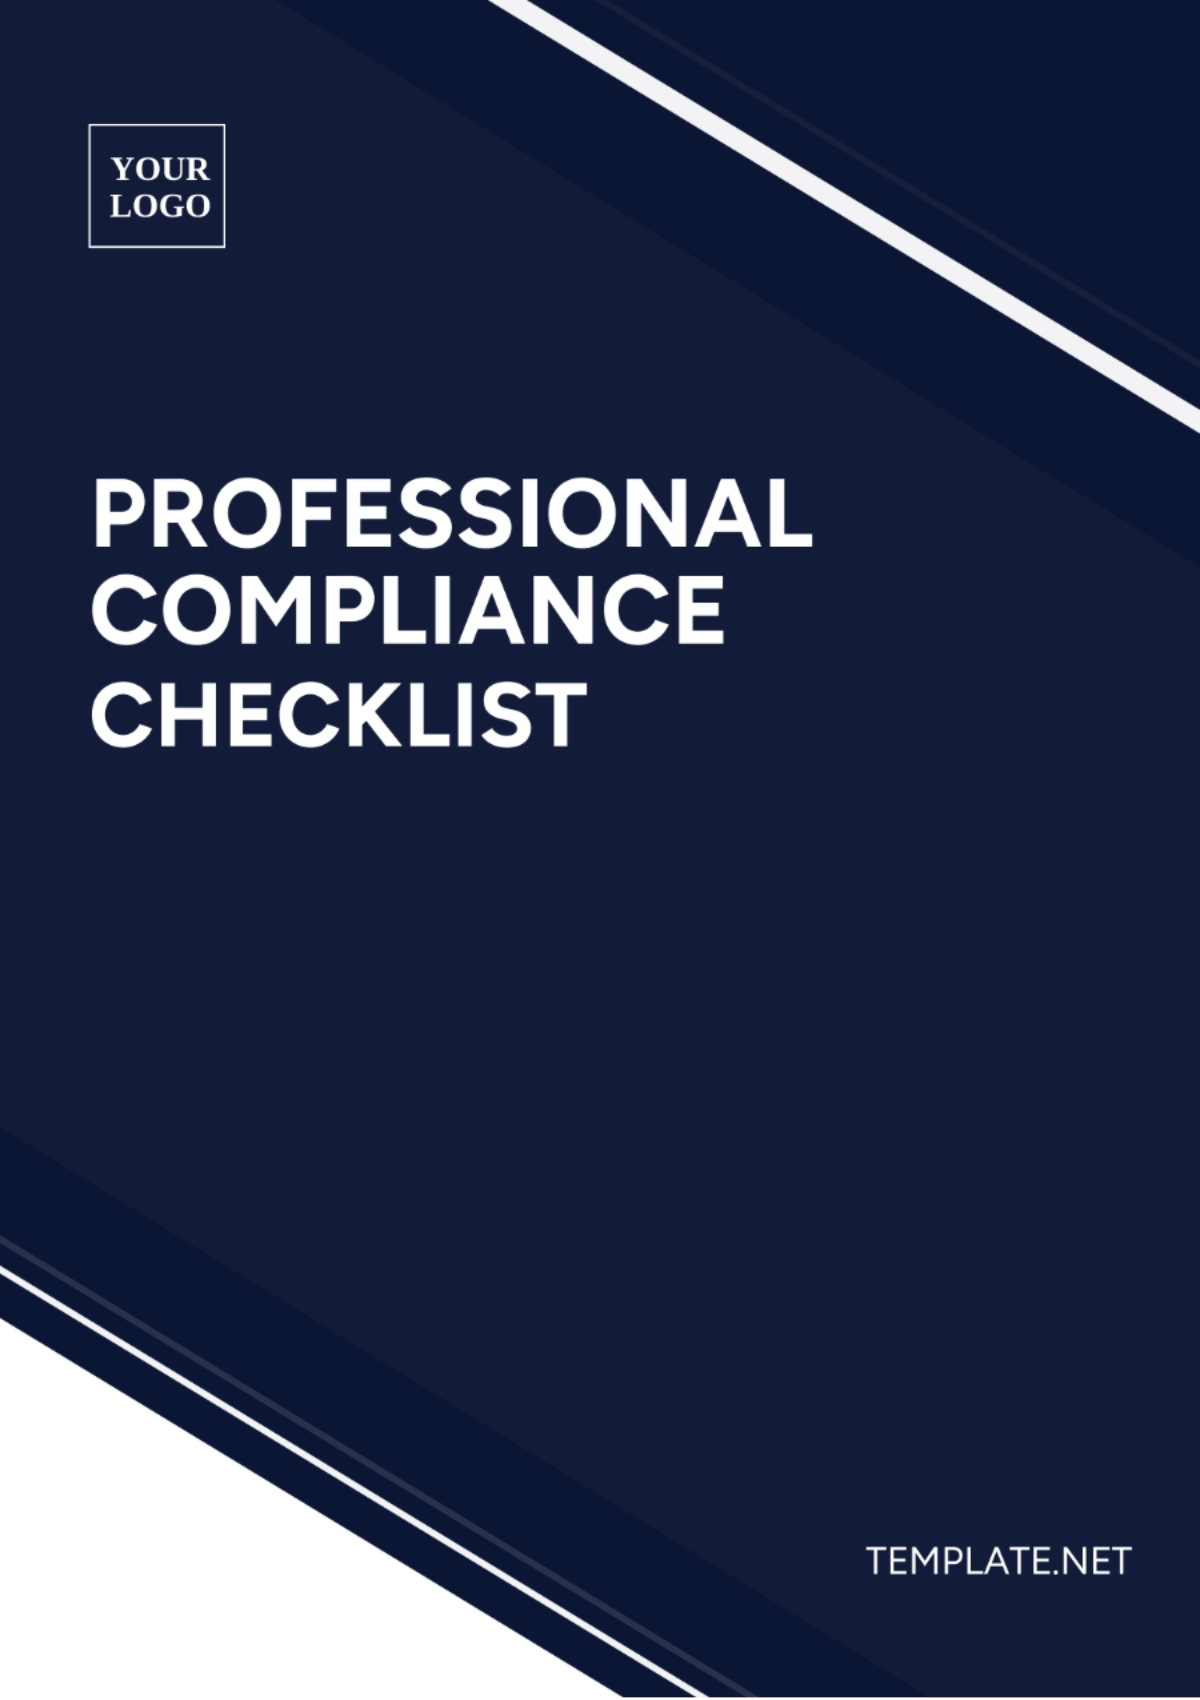 Professional Compliance Checklist Template